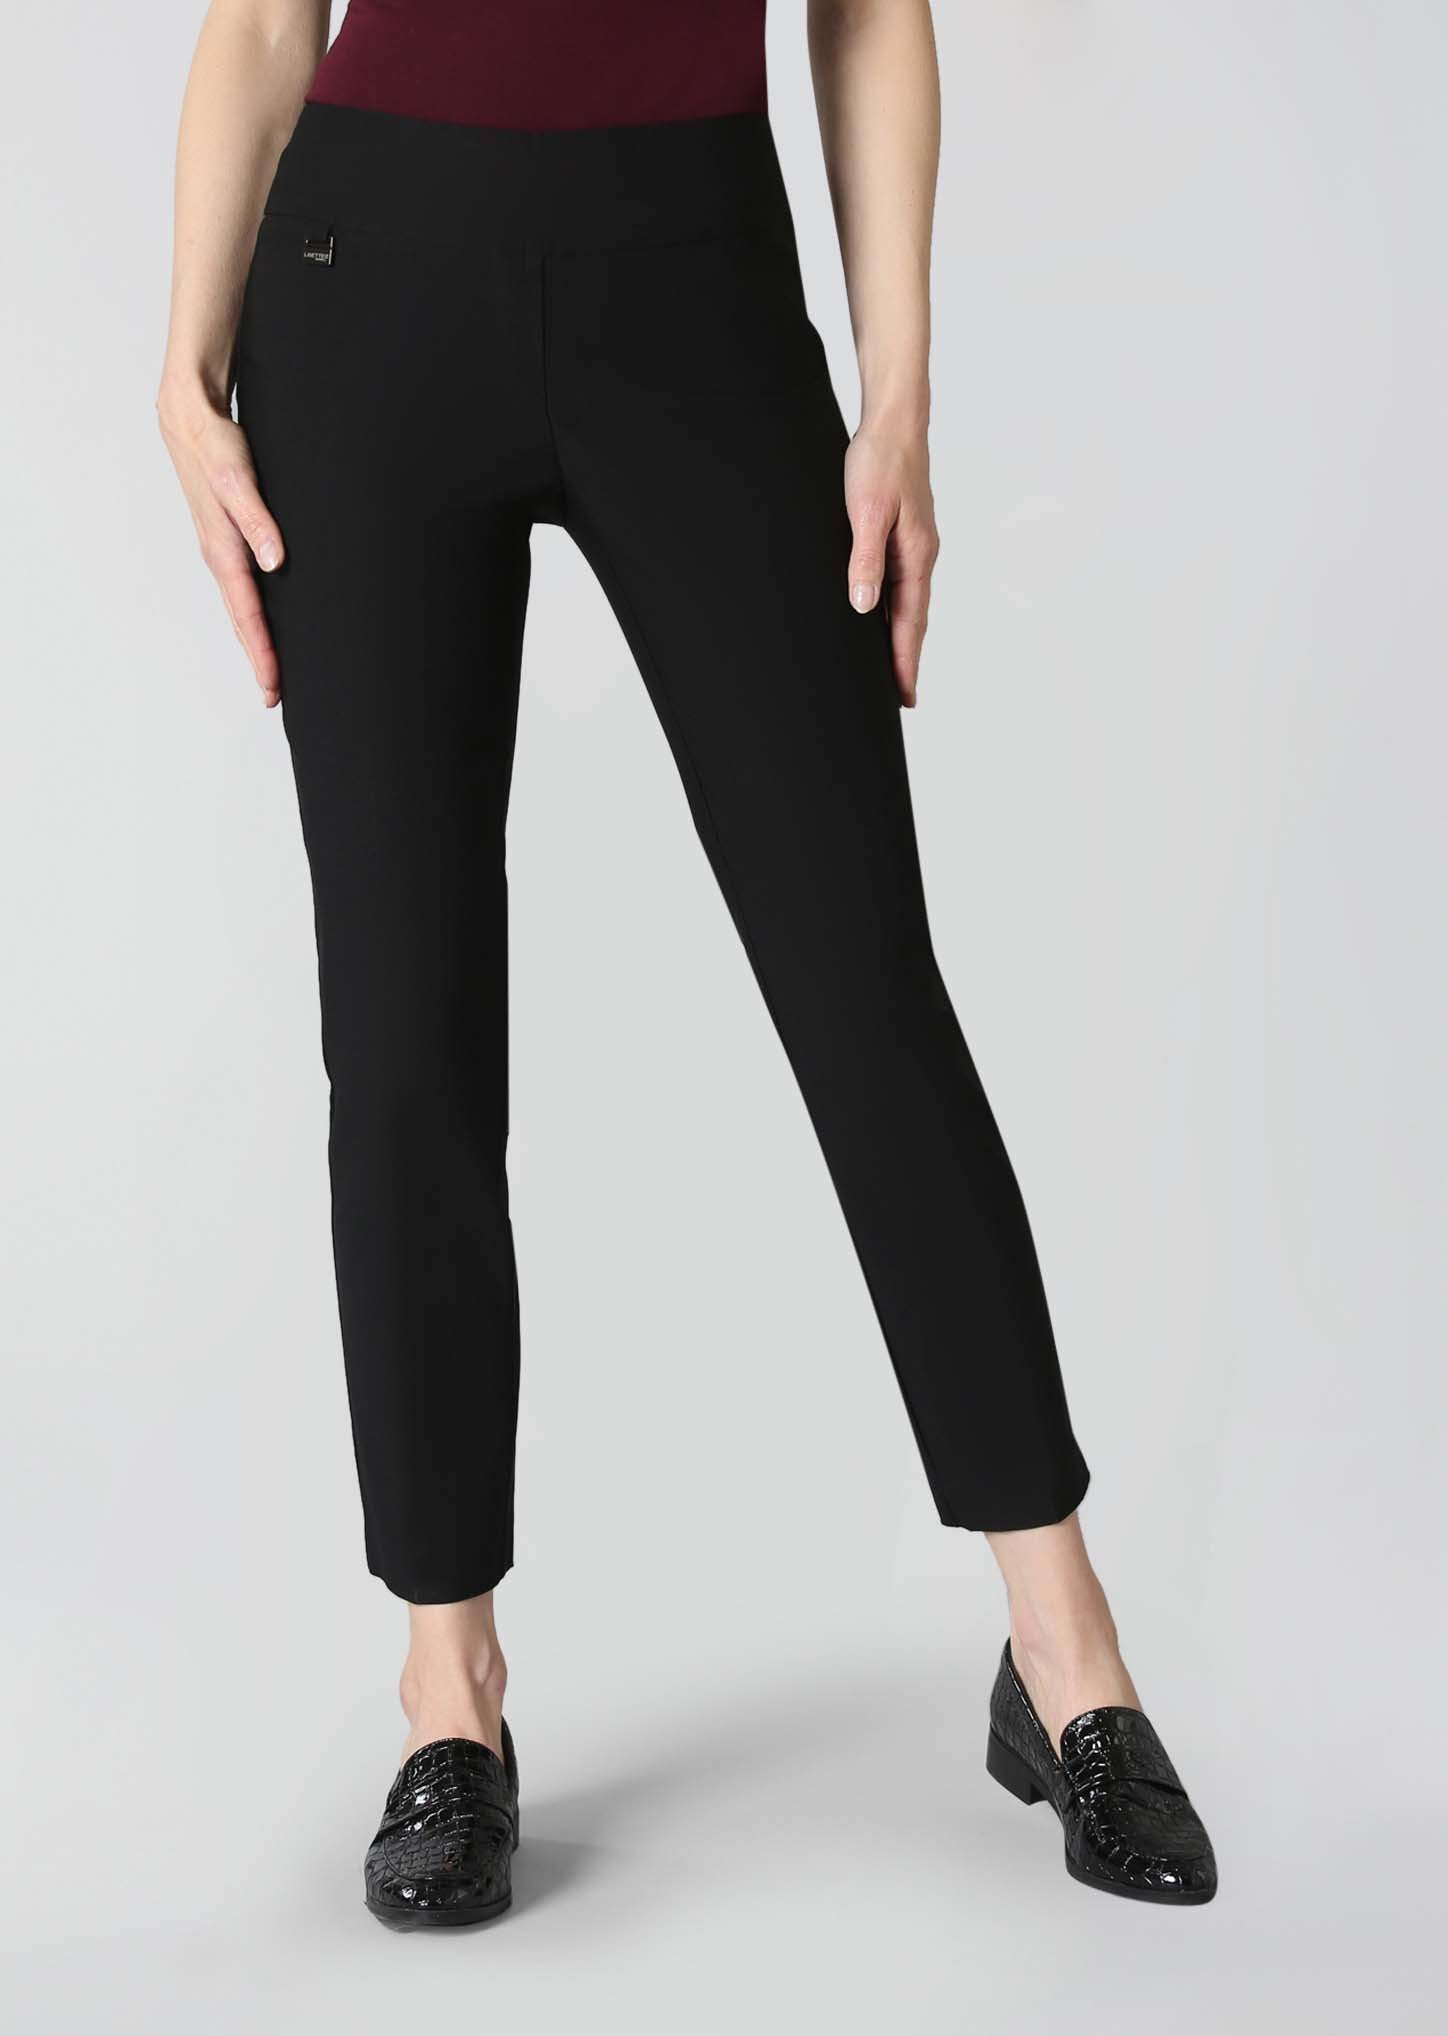 Buy GAP Women Grey High Rise Skinny Ankle Pants - NNNOW.com